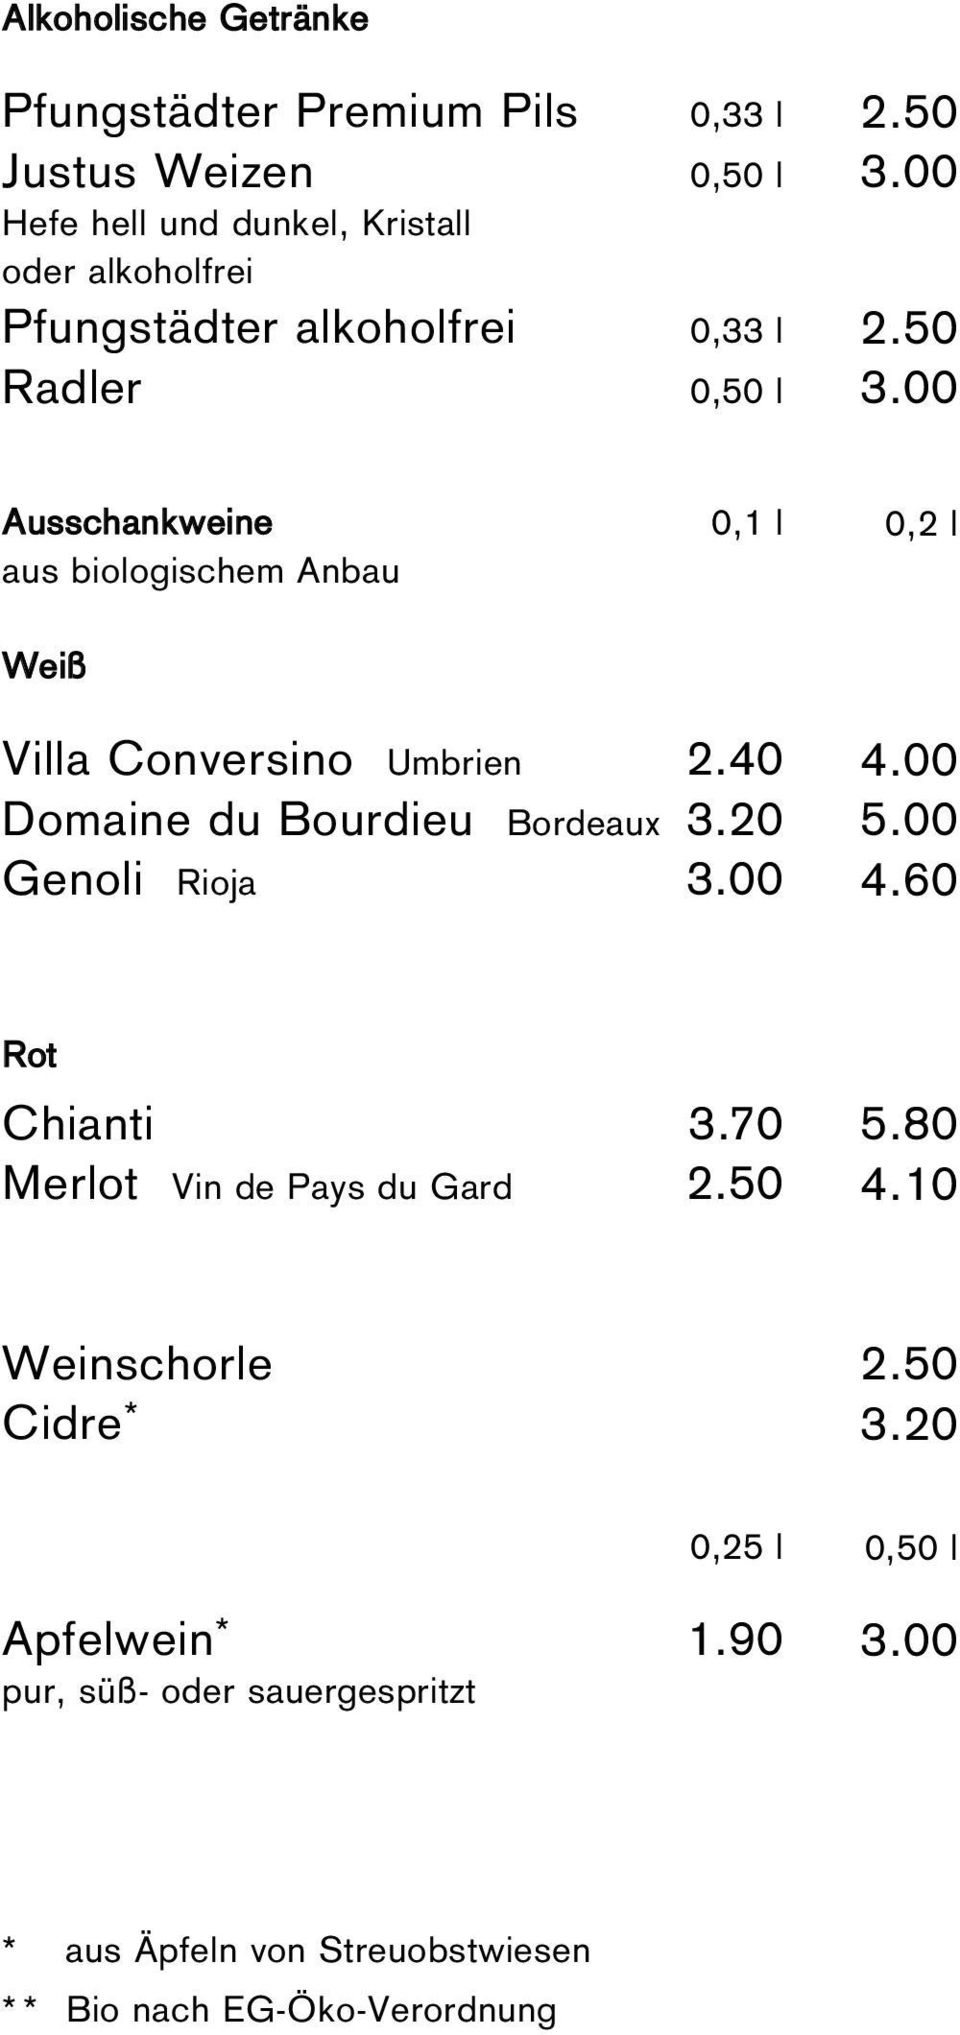 Domaine du Bourdieu Bordeaux Genoli Rioja 2.40 5.00 4.60 Rot Chianti Merlot Vin de Pays du Gard 3.70 5.